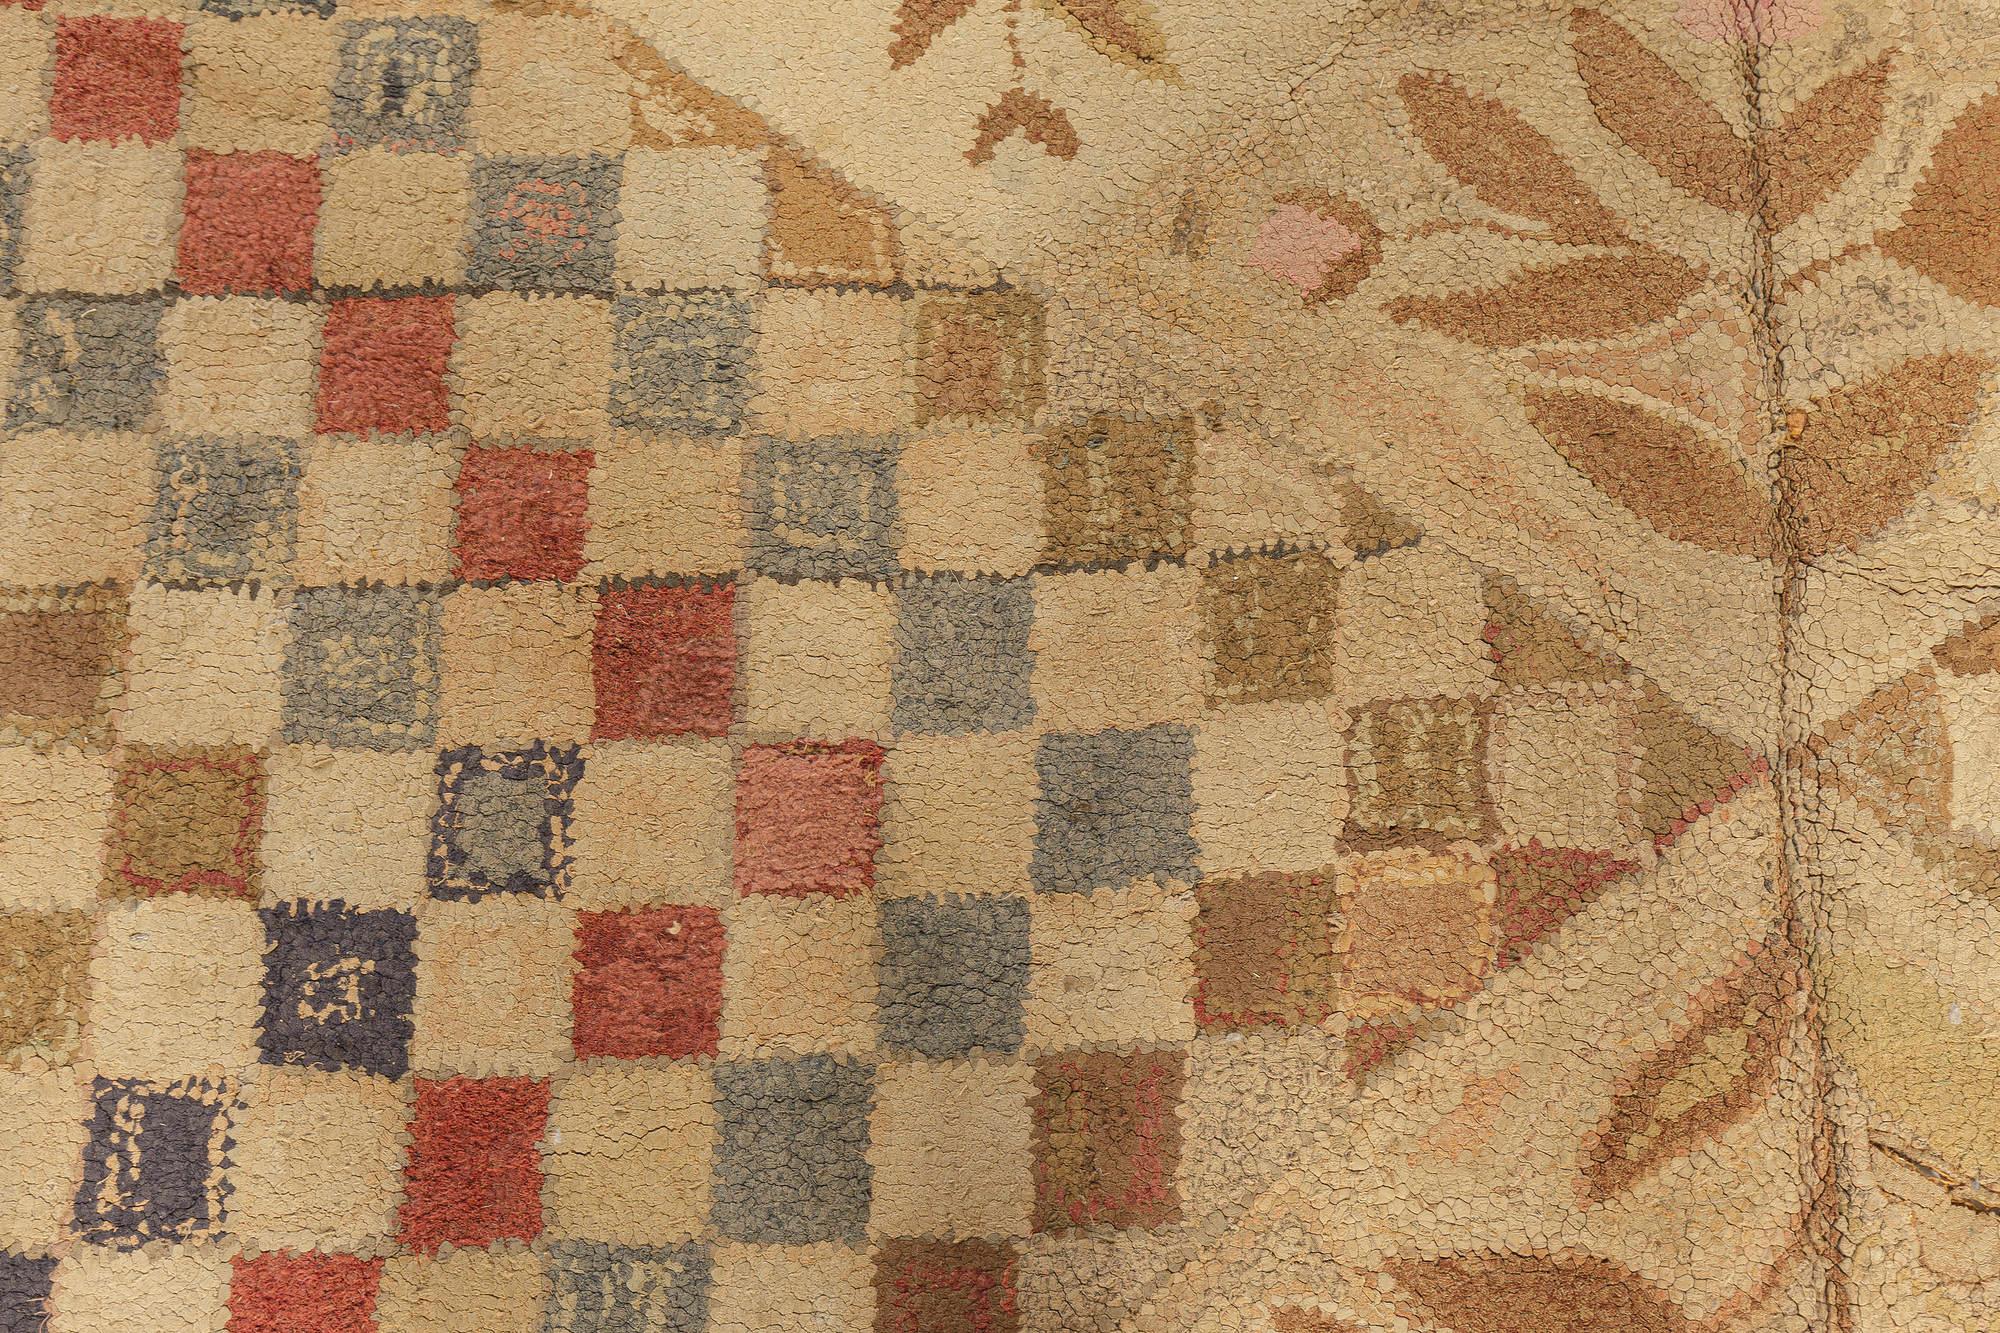 Mid-20th century Botanic Motifs on Checkered Beige Background Hooked Wool Rug
Size: 8'8